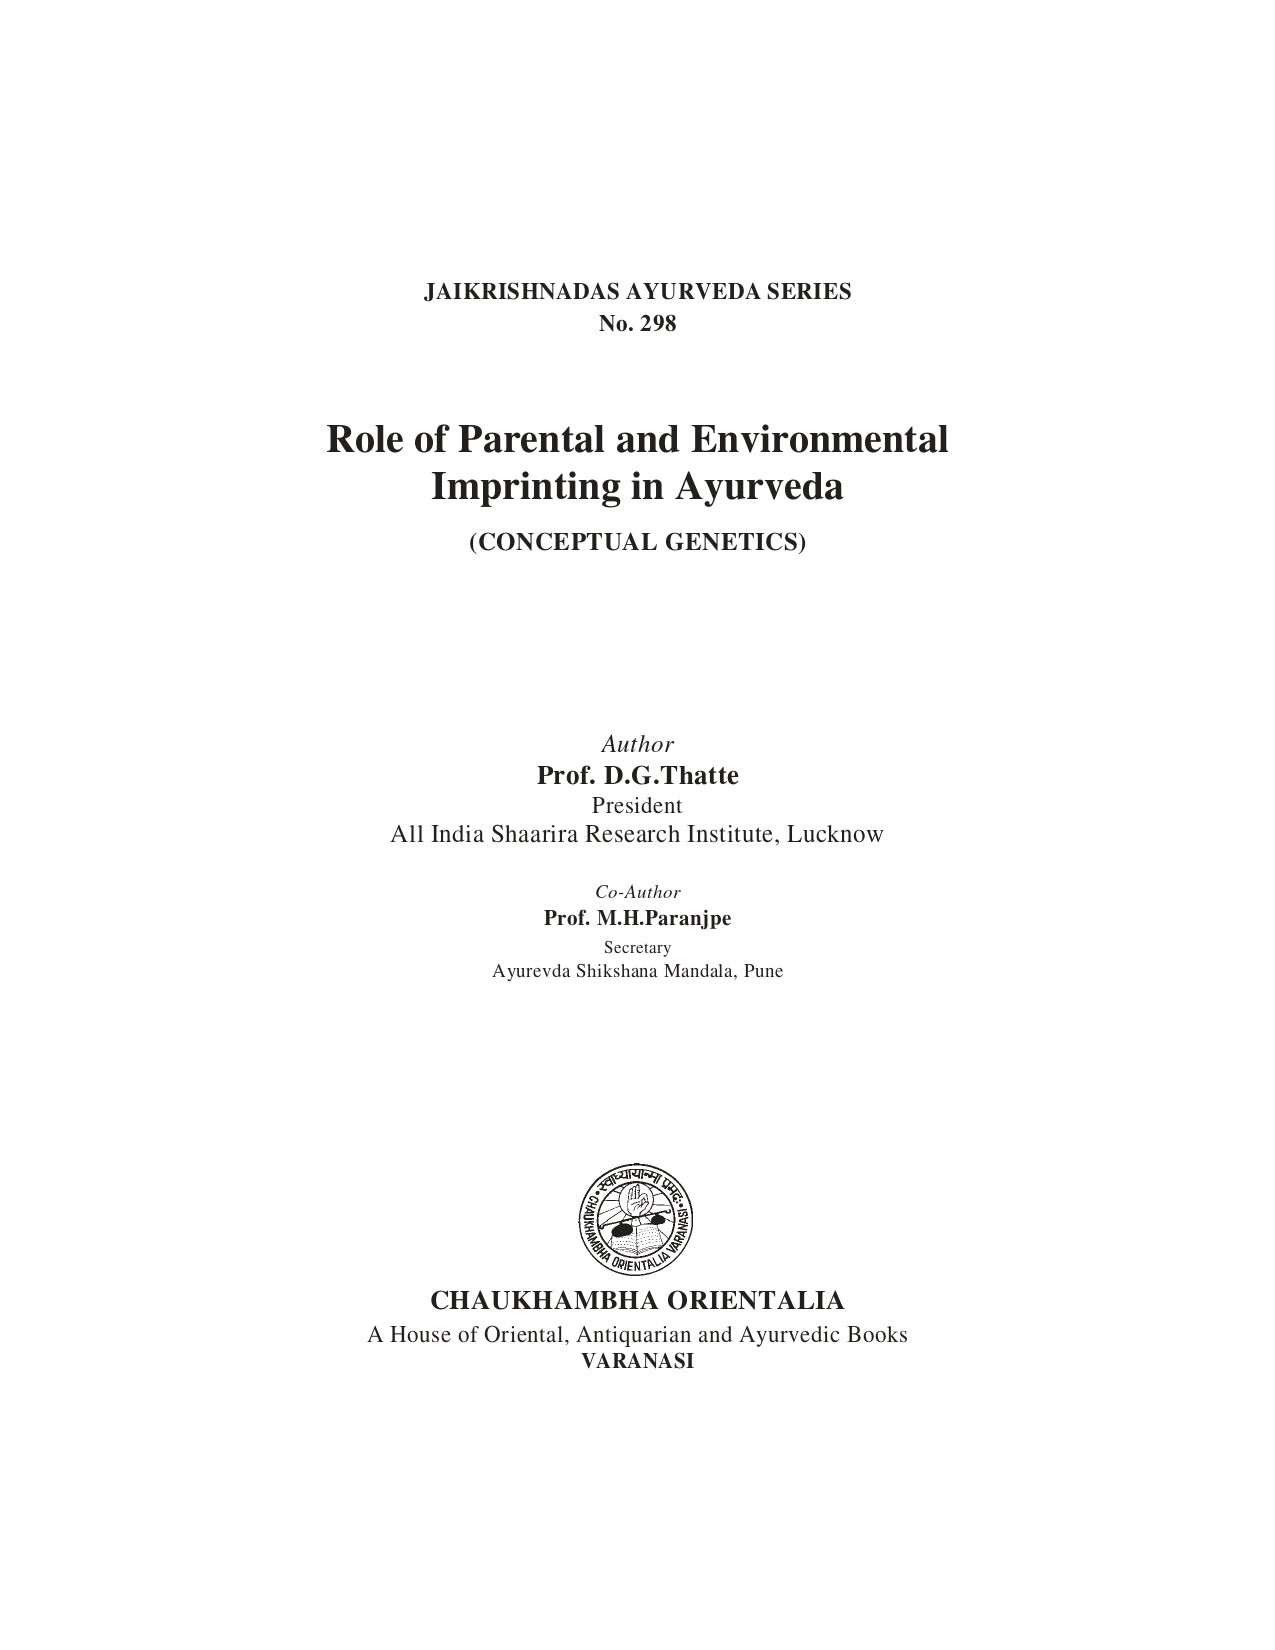 Chaukhambha Orientalia Role of Parental and Environmental Imprinting in Ayurveda